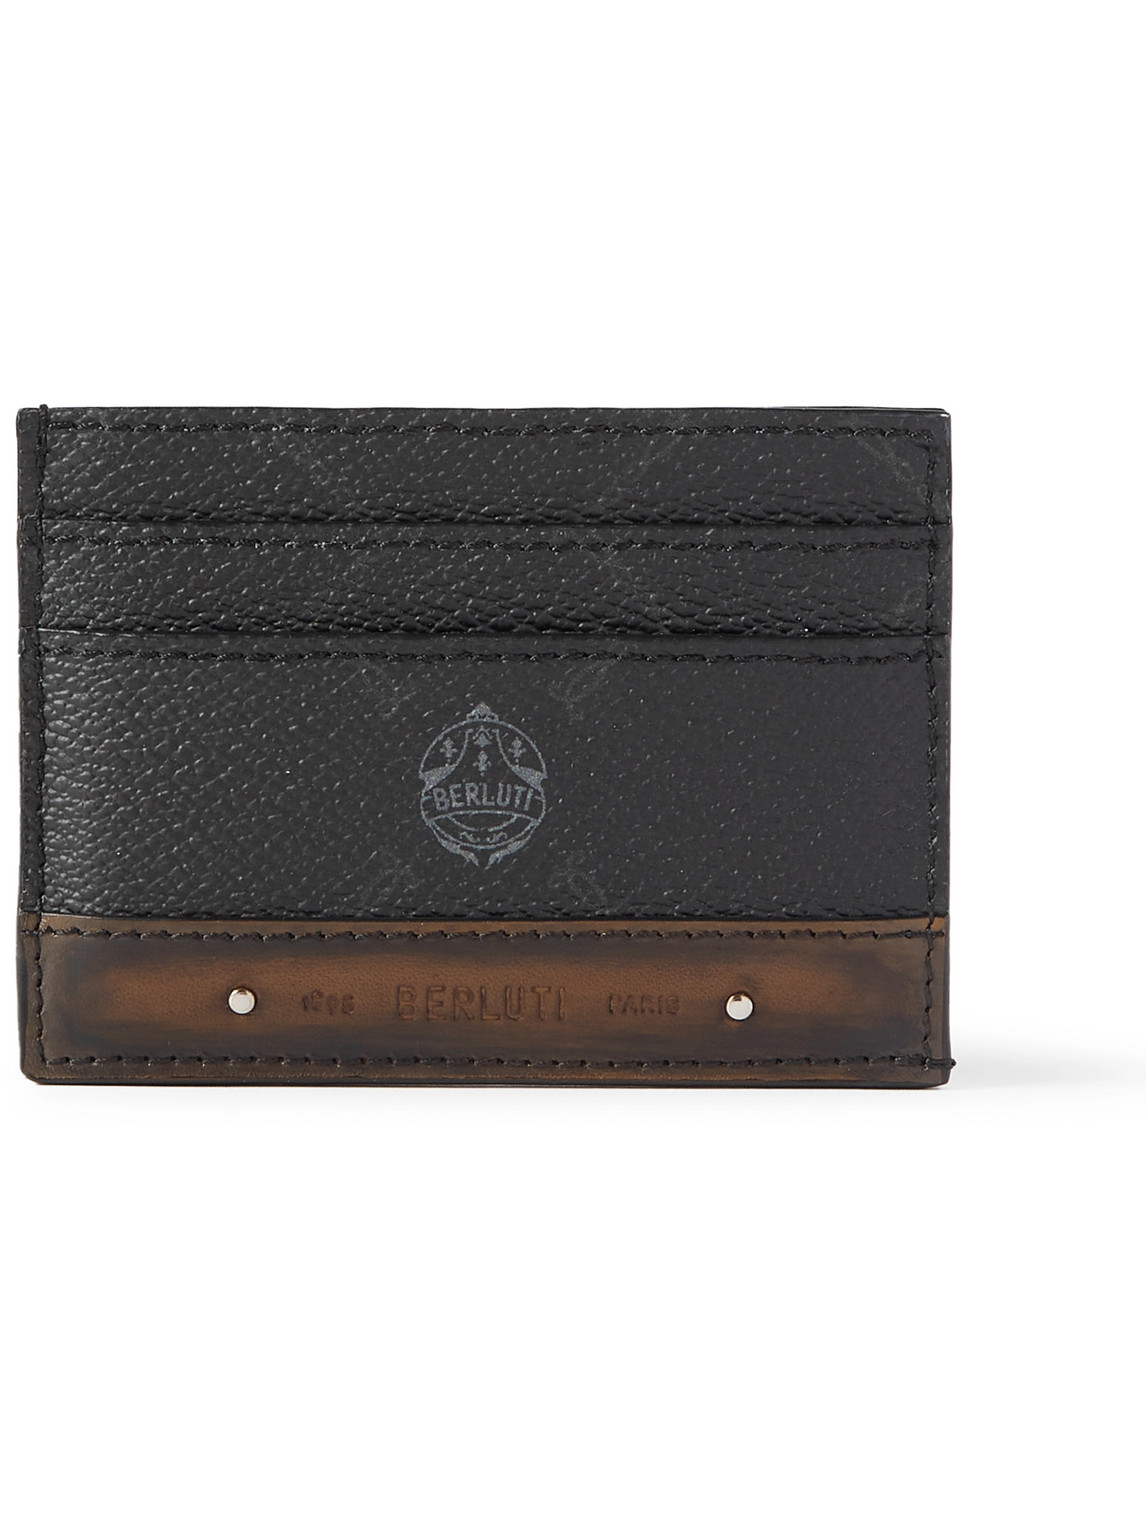 Berluti Drive Full-grain Leather Cardholder In Black